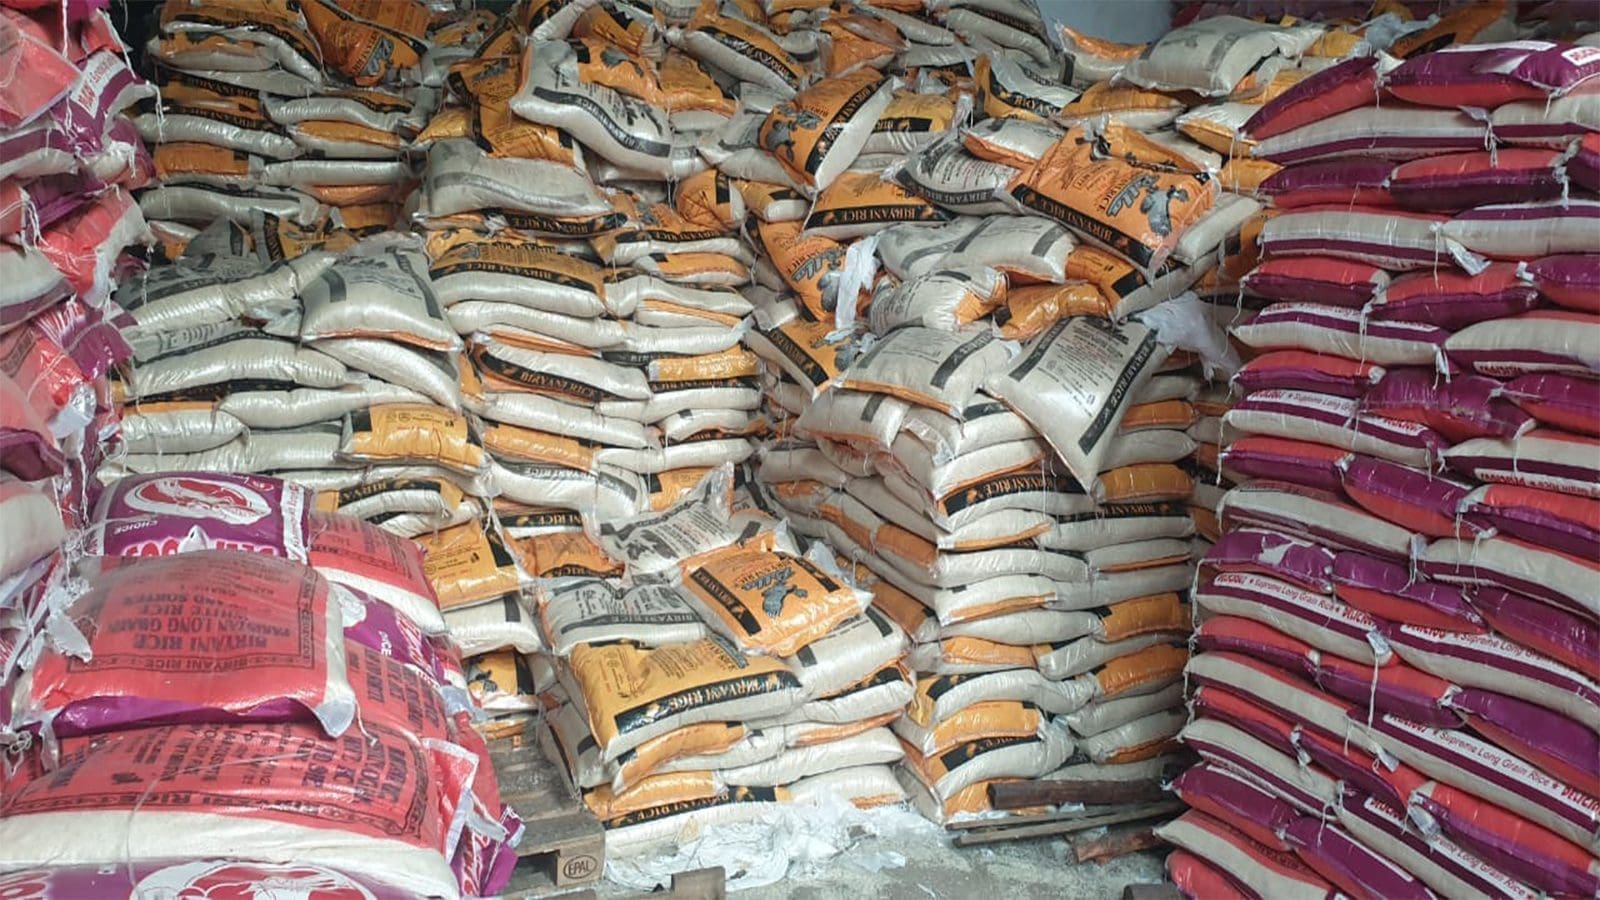 KEBS warns consumers of aflatoxin-contaminated rice